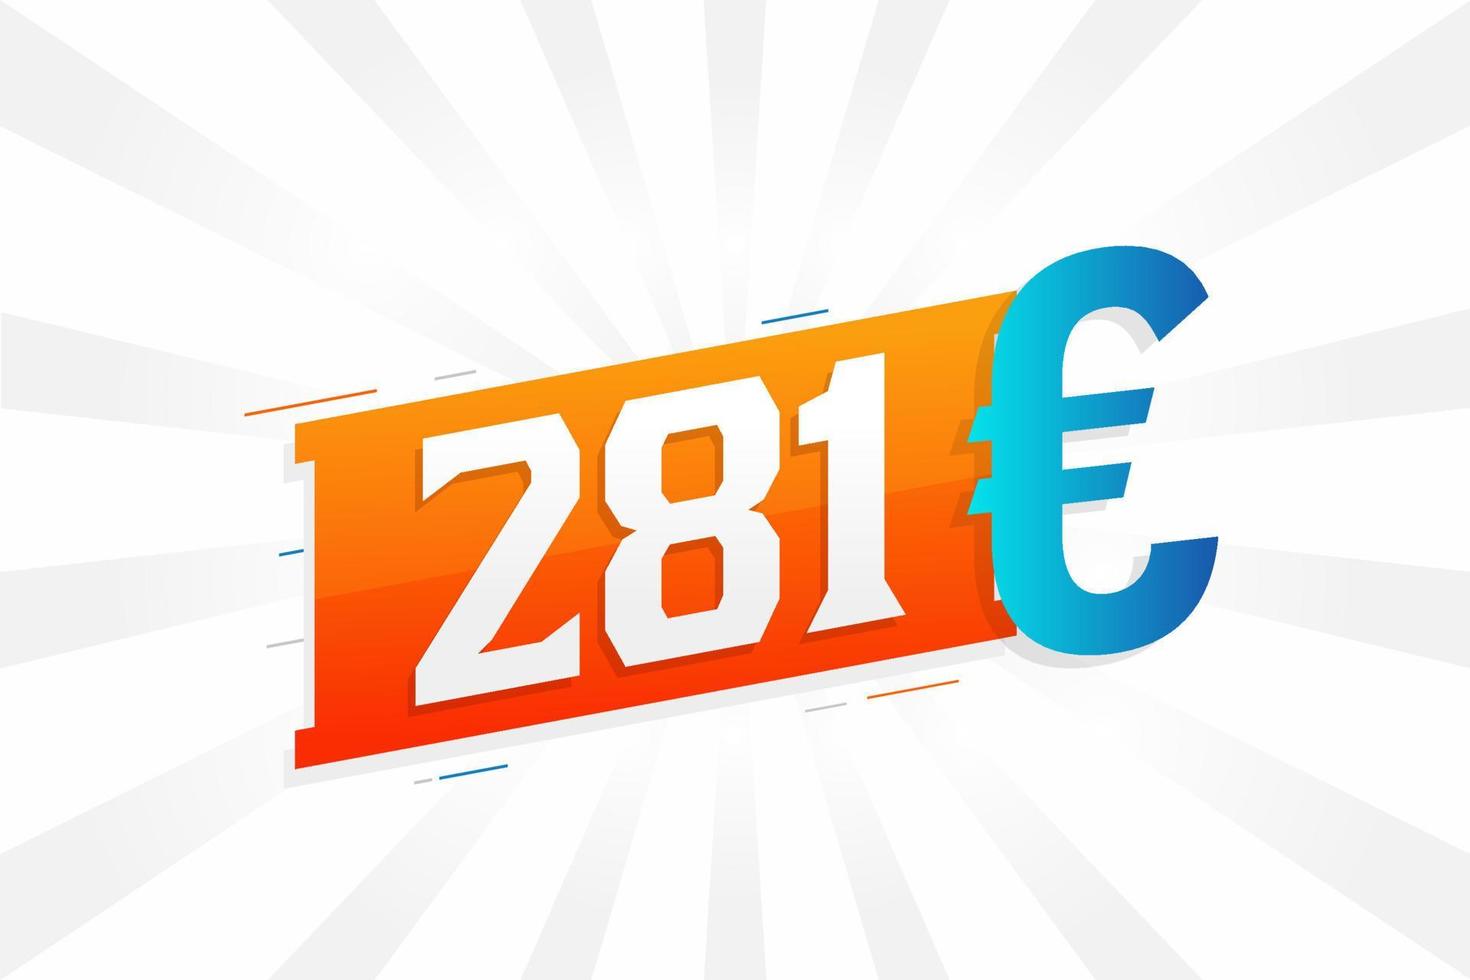 Símbolo de texto vectorial de moneda de 281 euros. 281 euro vector de stock de dinero de la unión europea